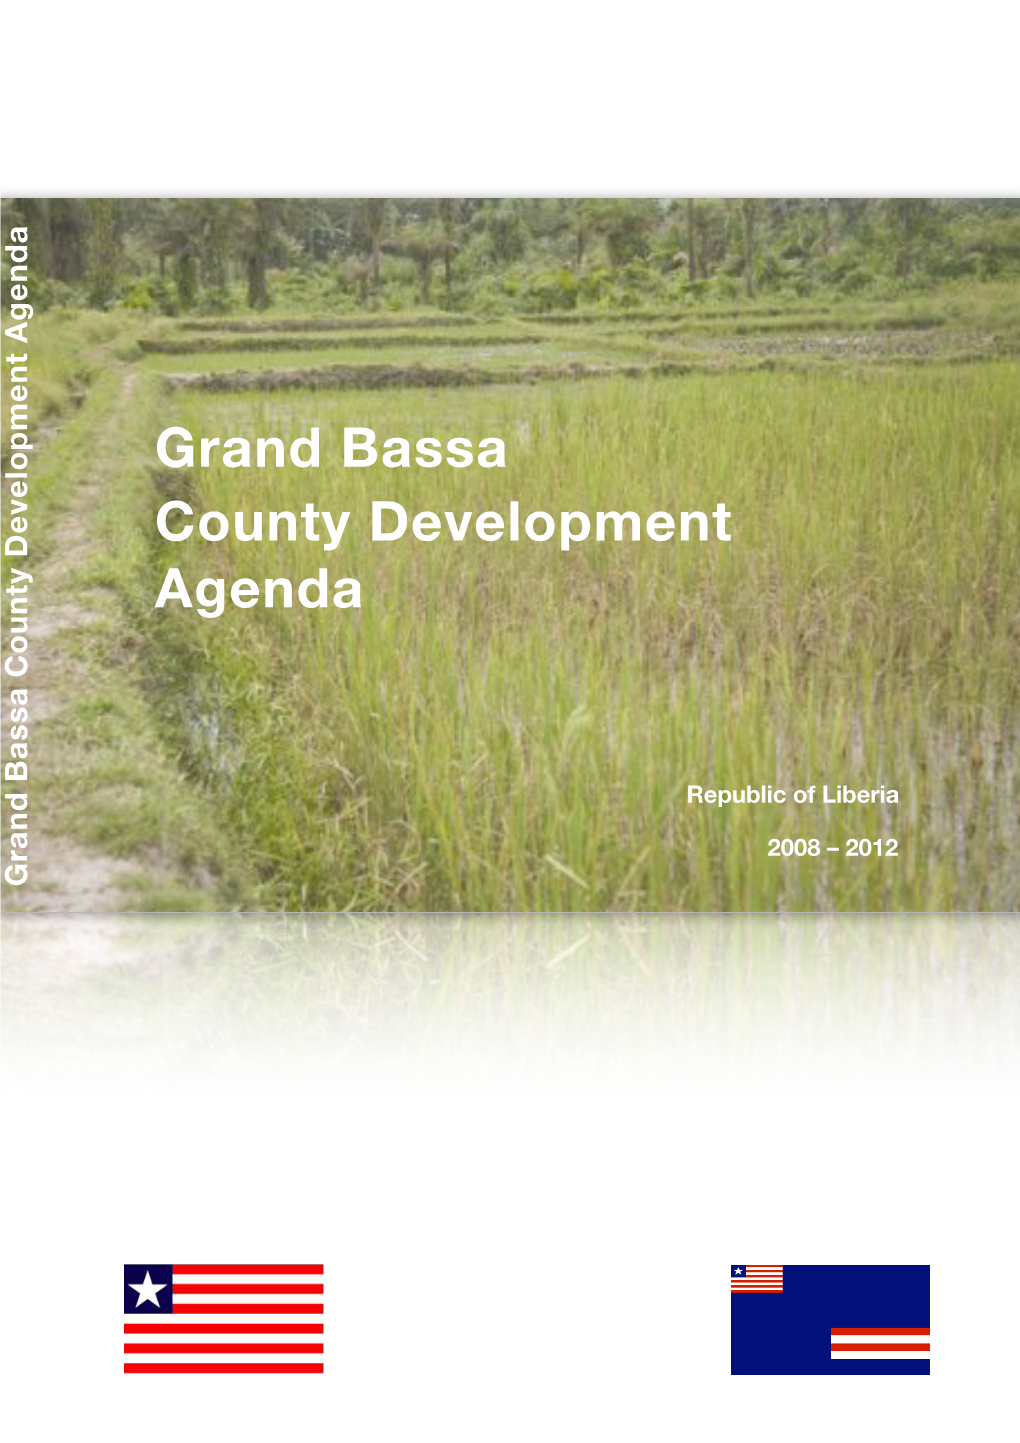 Grand Bassa County Development Agenda